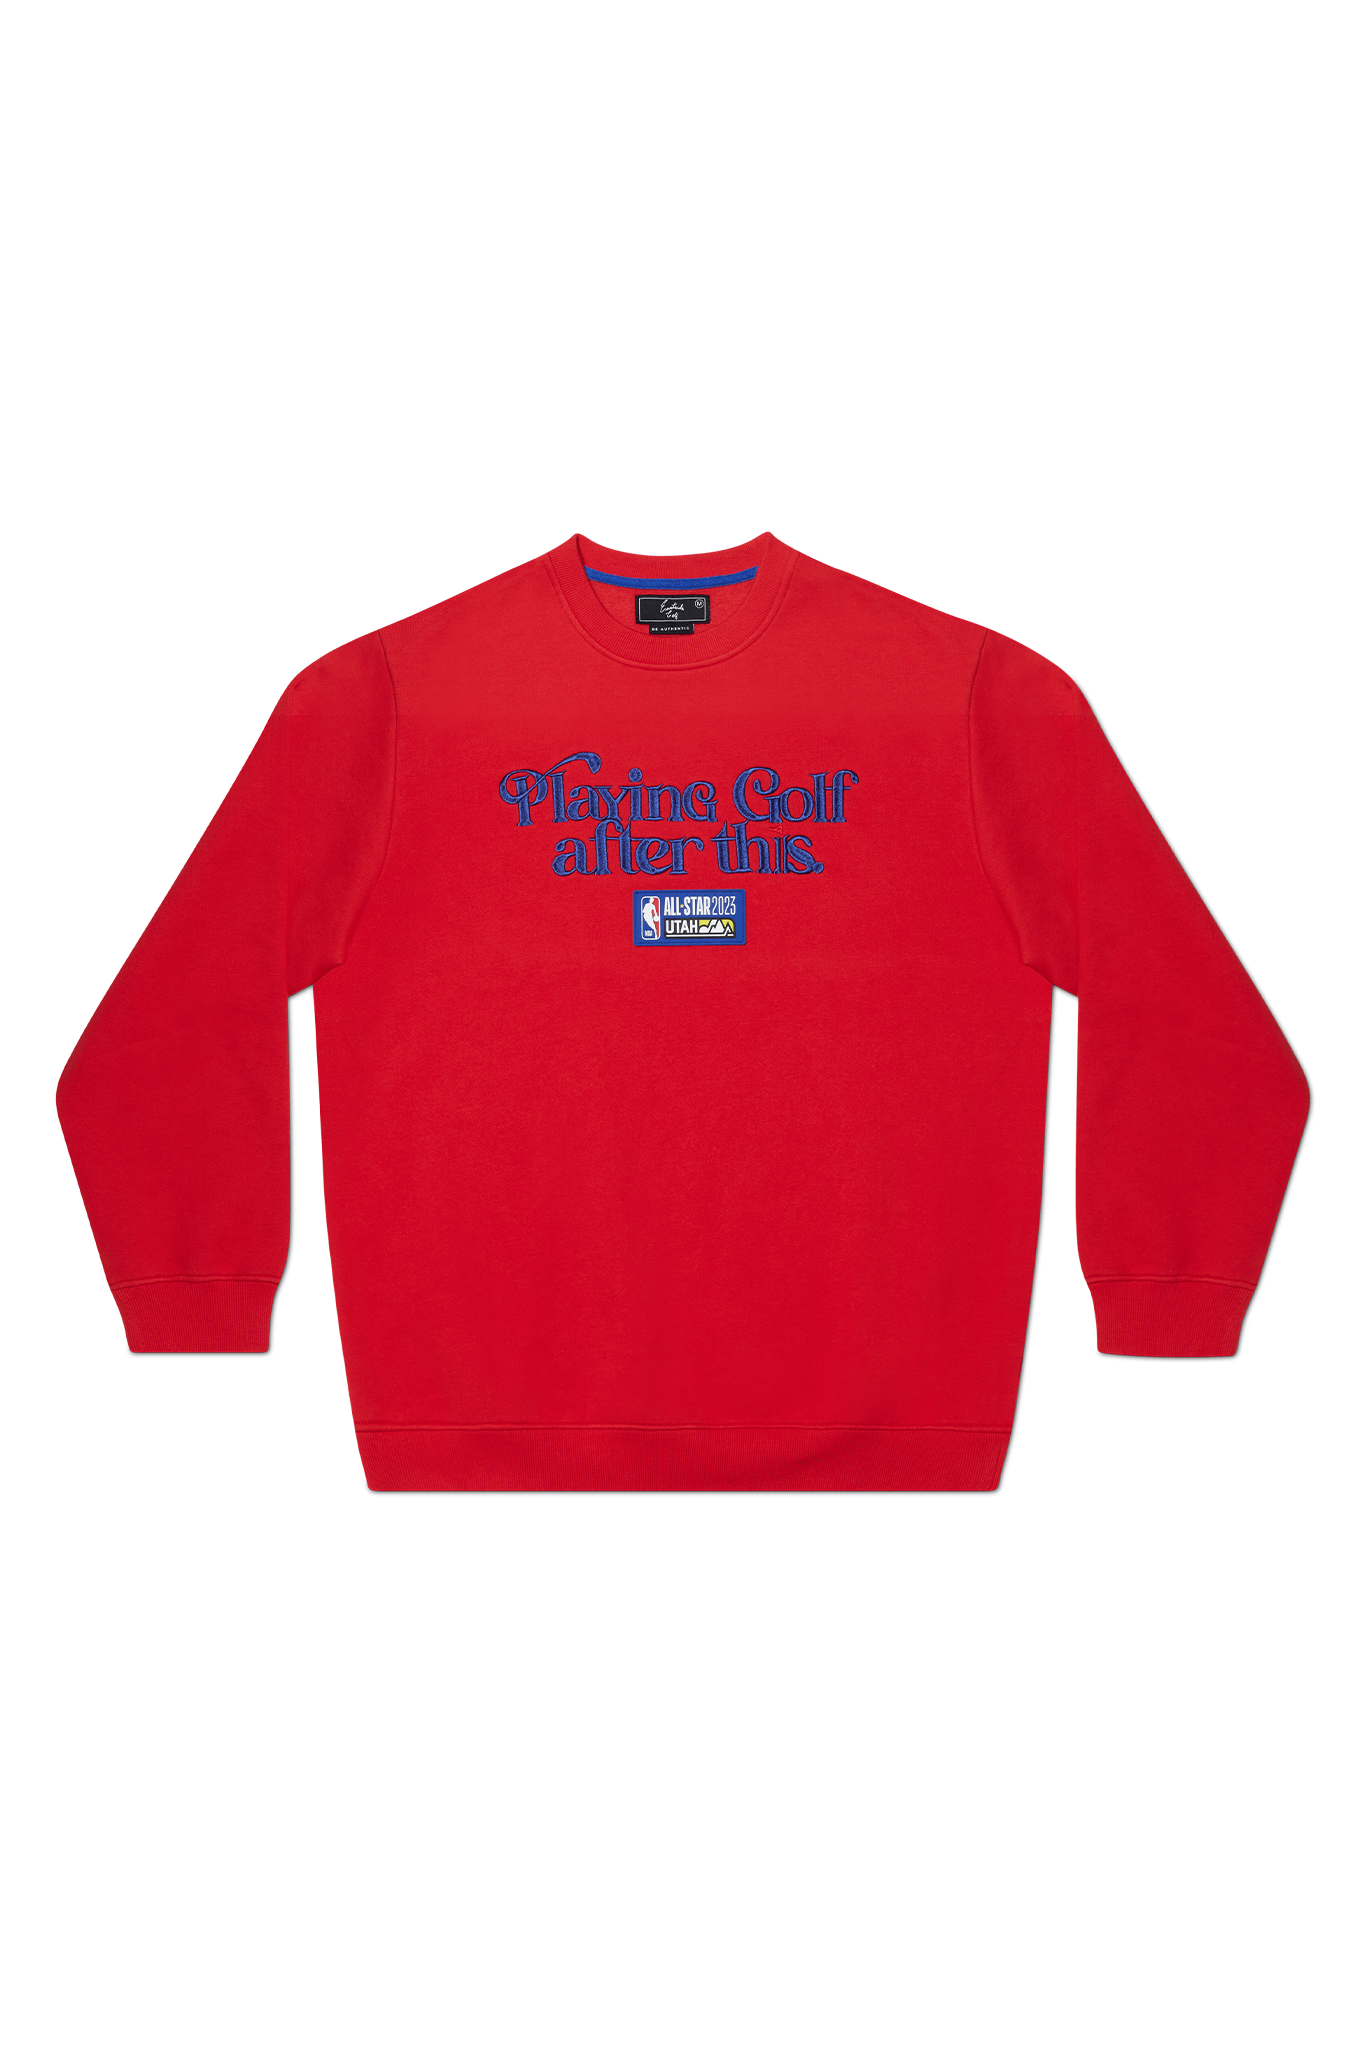 Red PGAT All Star Sweatshirt